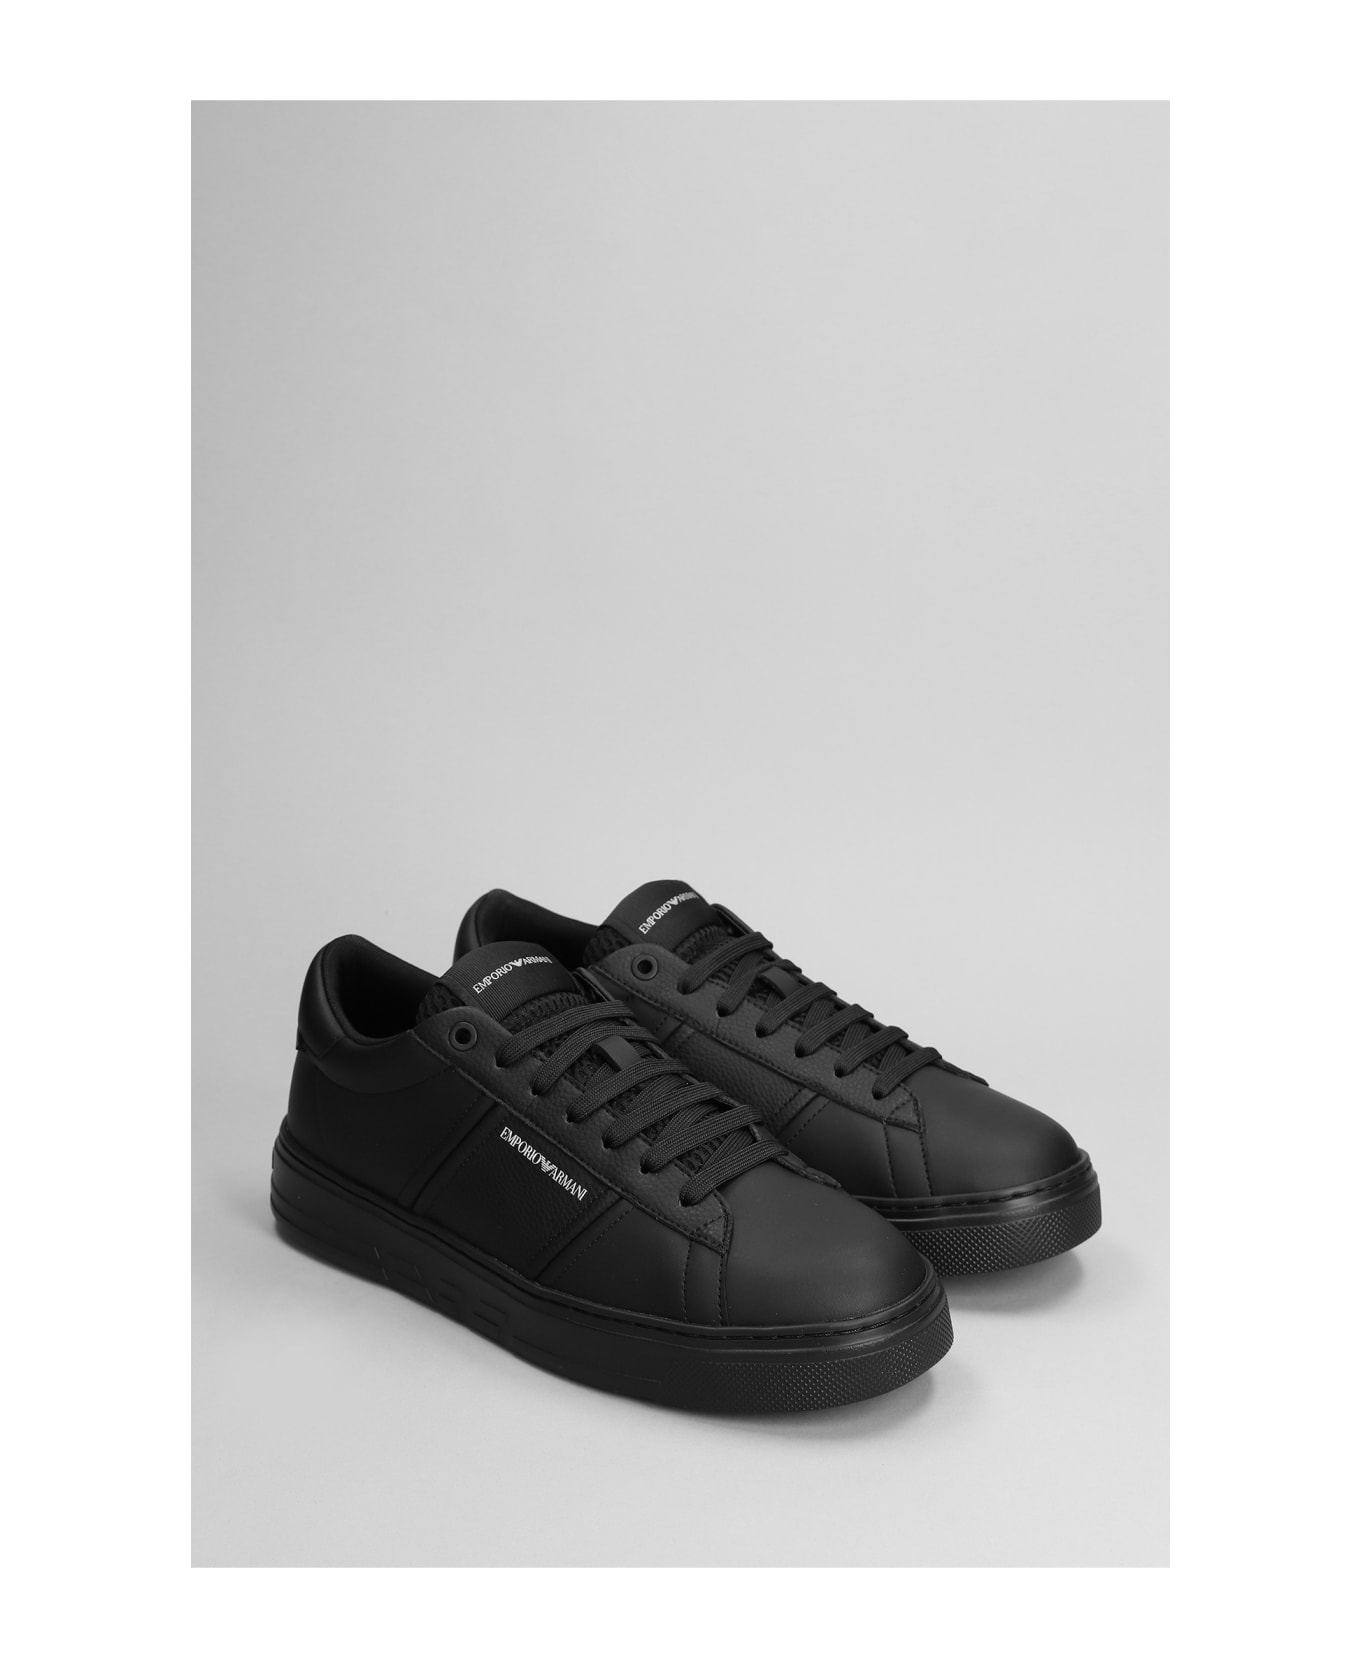 Emporio Armani Sneakers In Black Leather - Black スニーカー